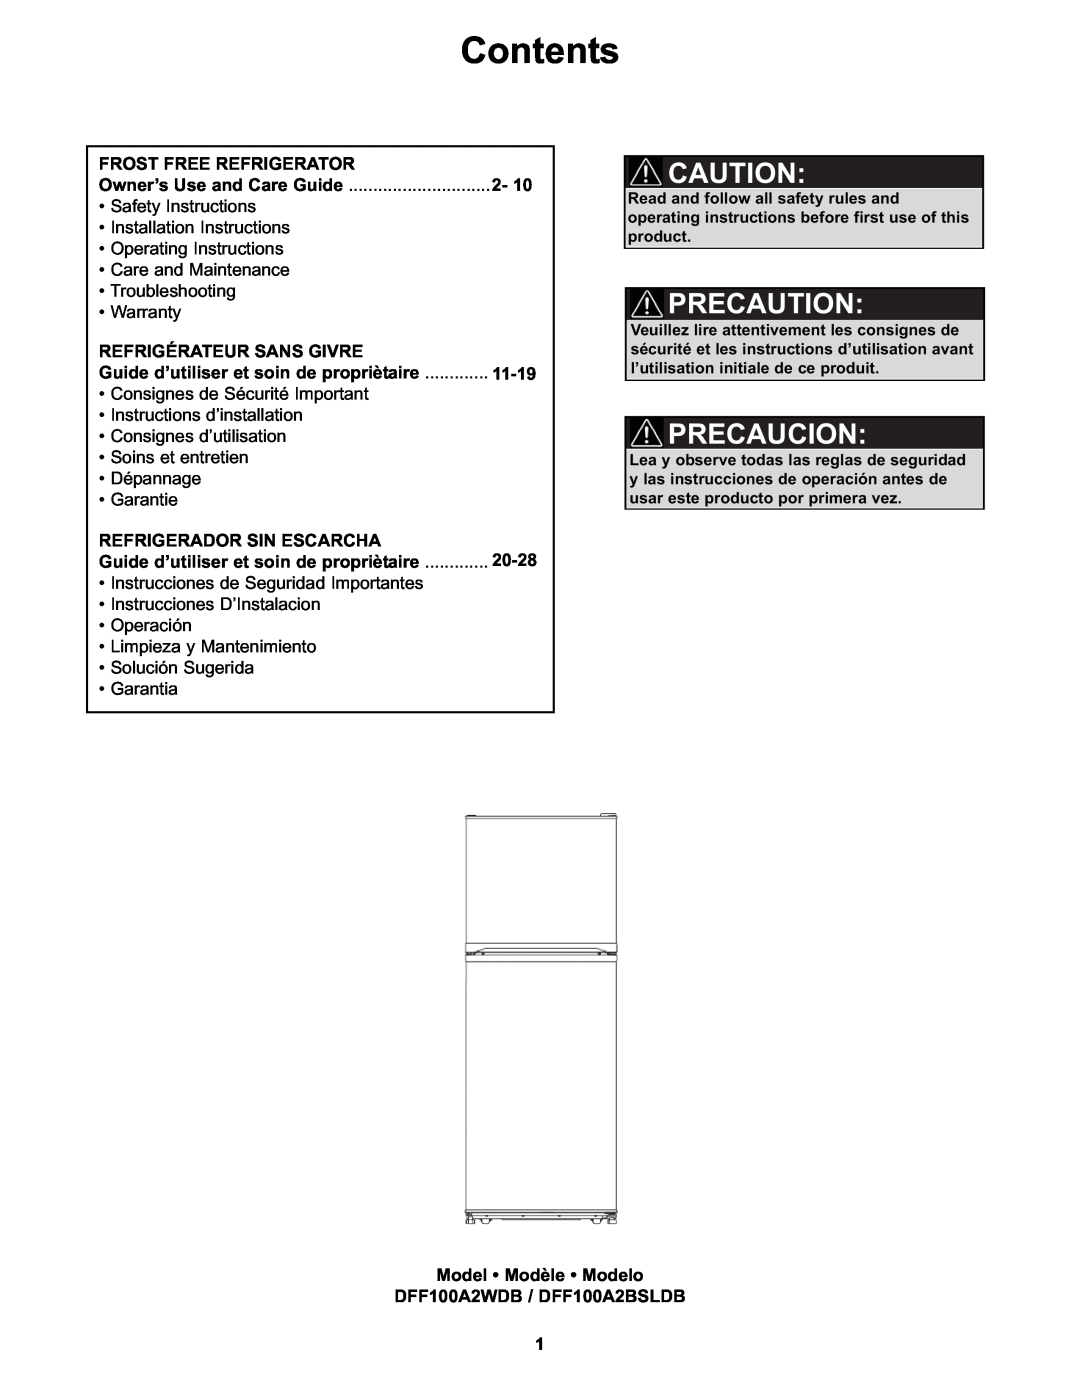 Danby DFF100A2WDB manual Contents, Precaution, Precaucion, Frost Free Refrigerator, Refrigérateur Sans Givre, 11-19, 20-28 